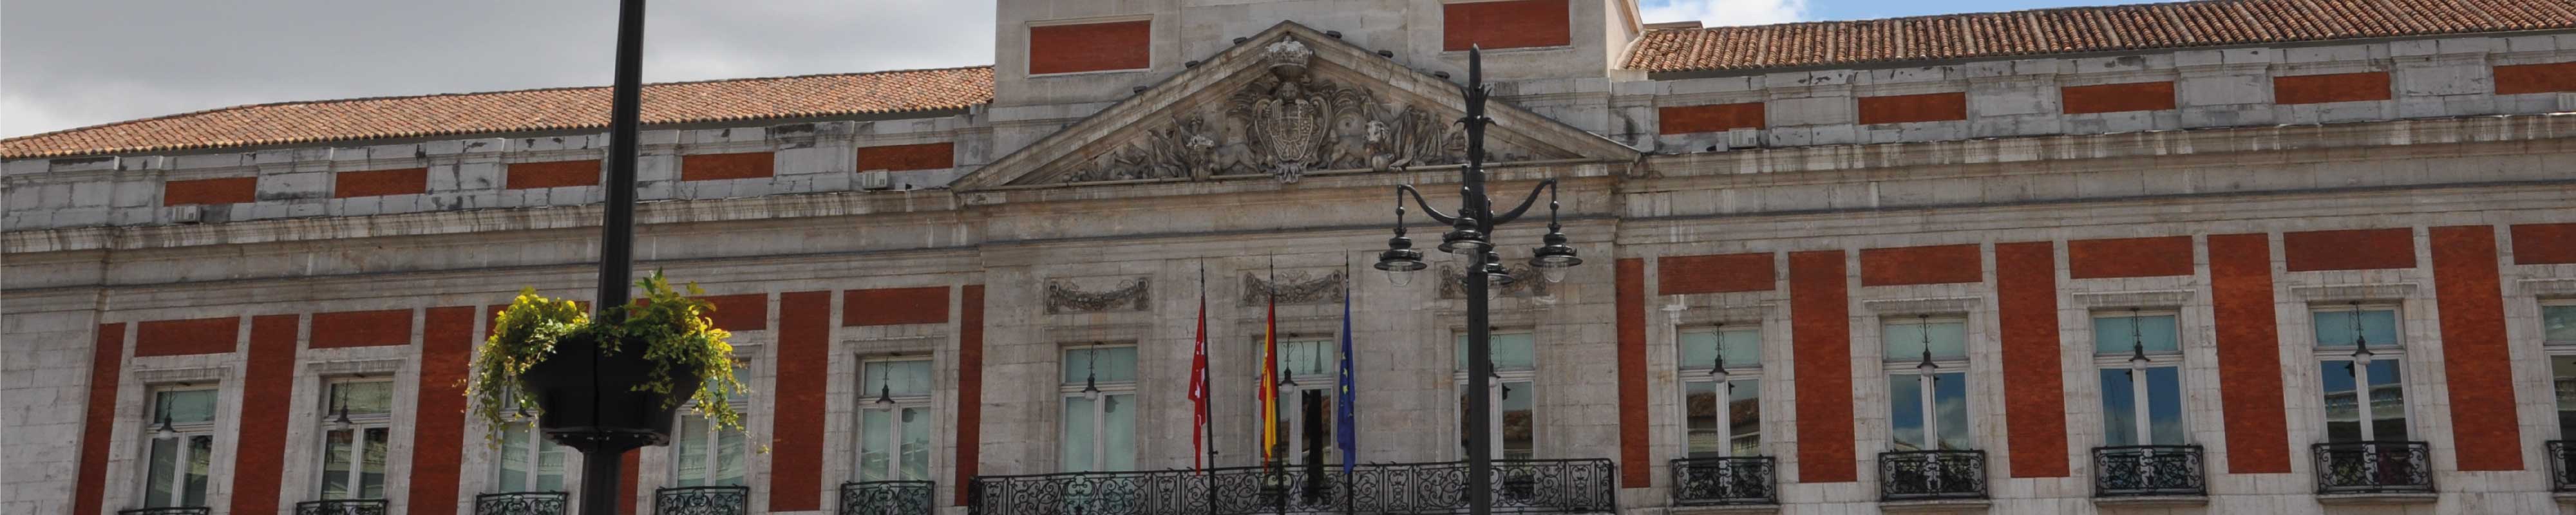 Consigna Equipaje | Puerta del Sol en Madrid - Nannybag